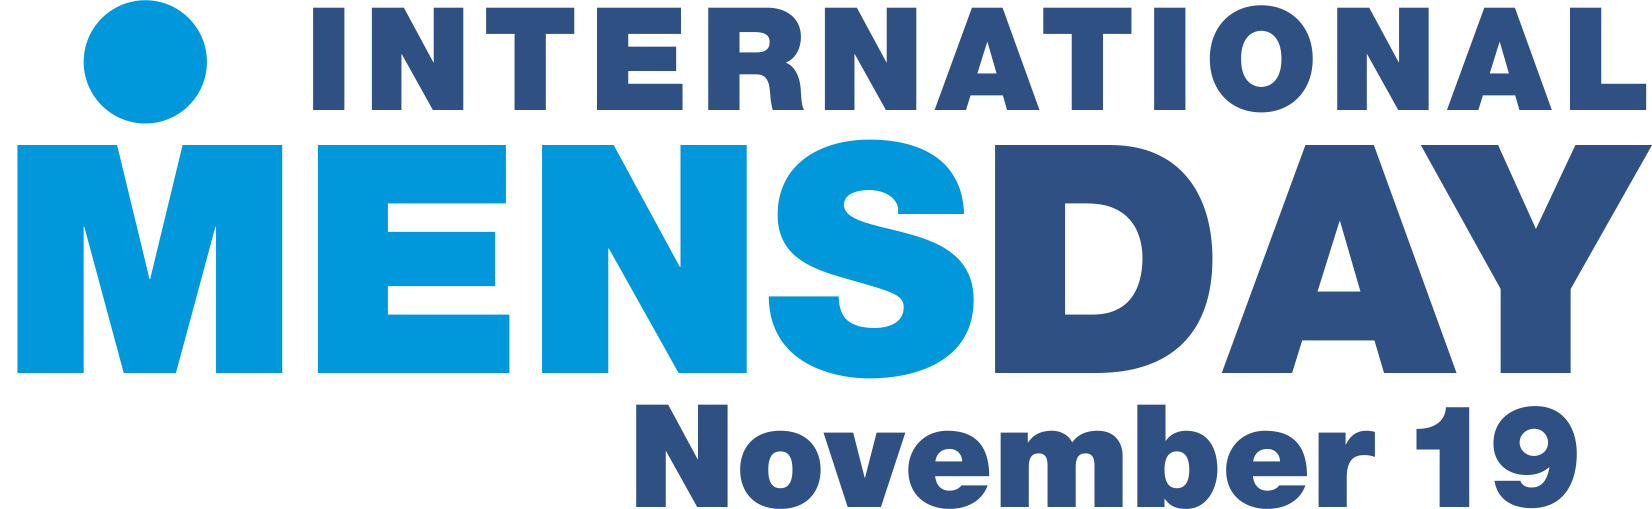 International Men’s Day text header image